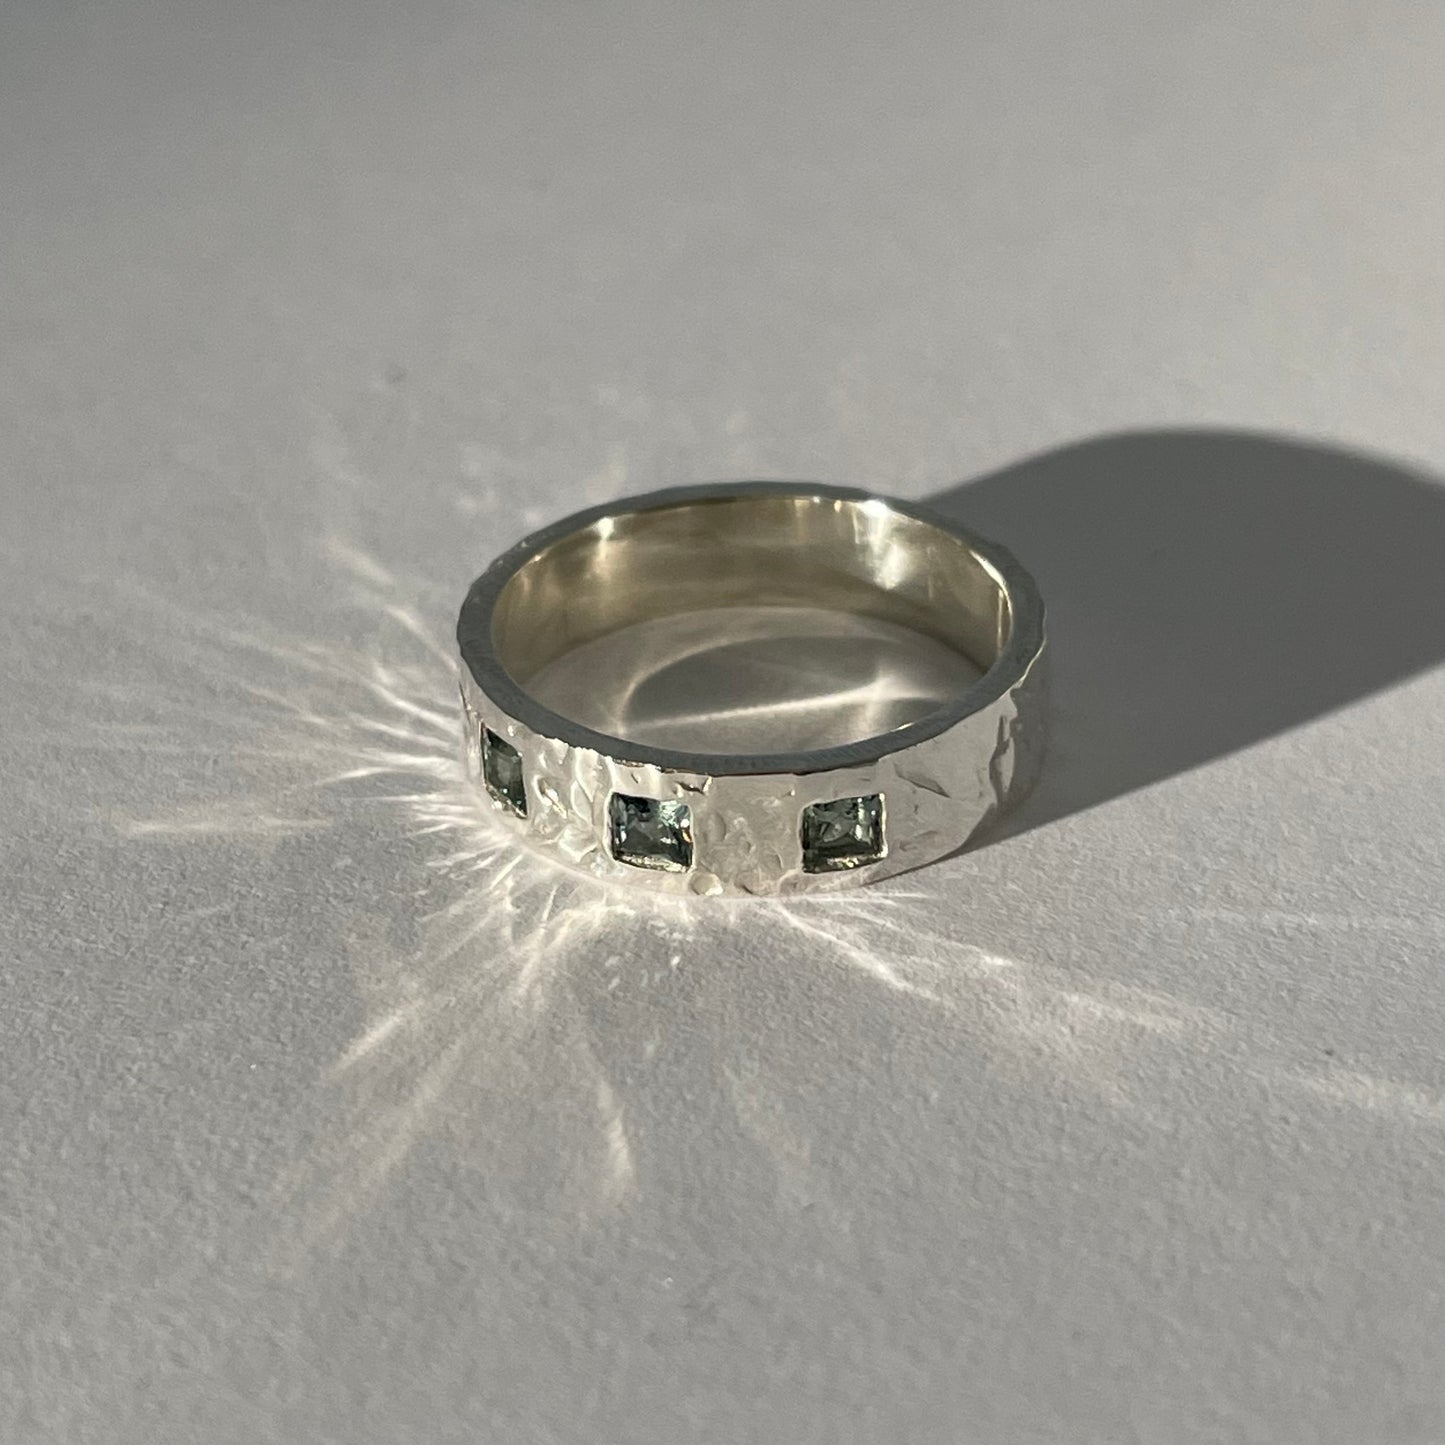 The Treasured Ring